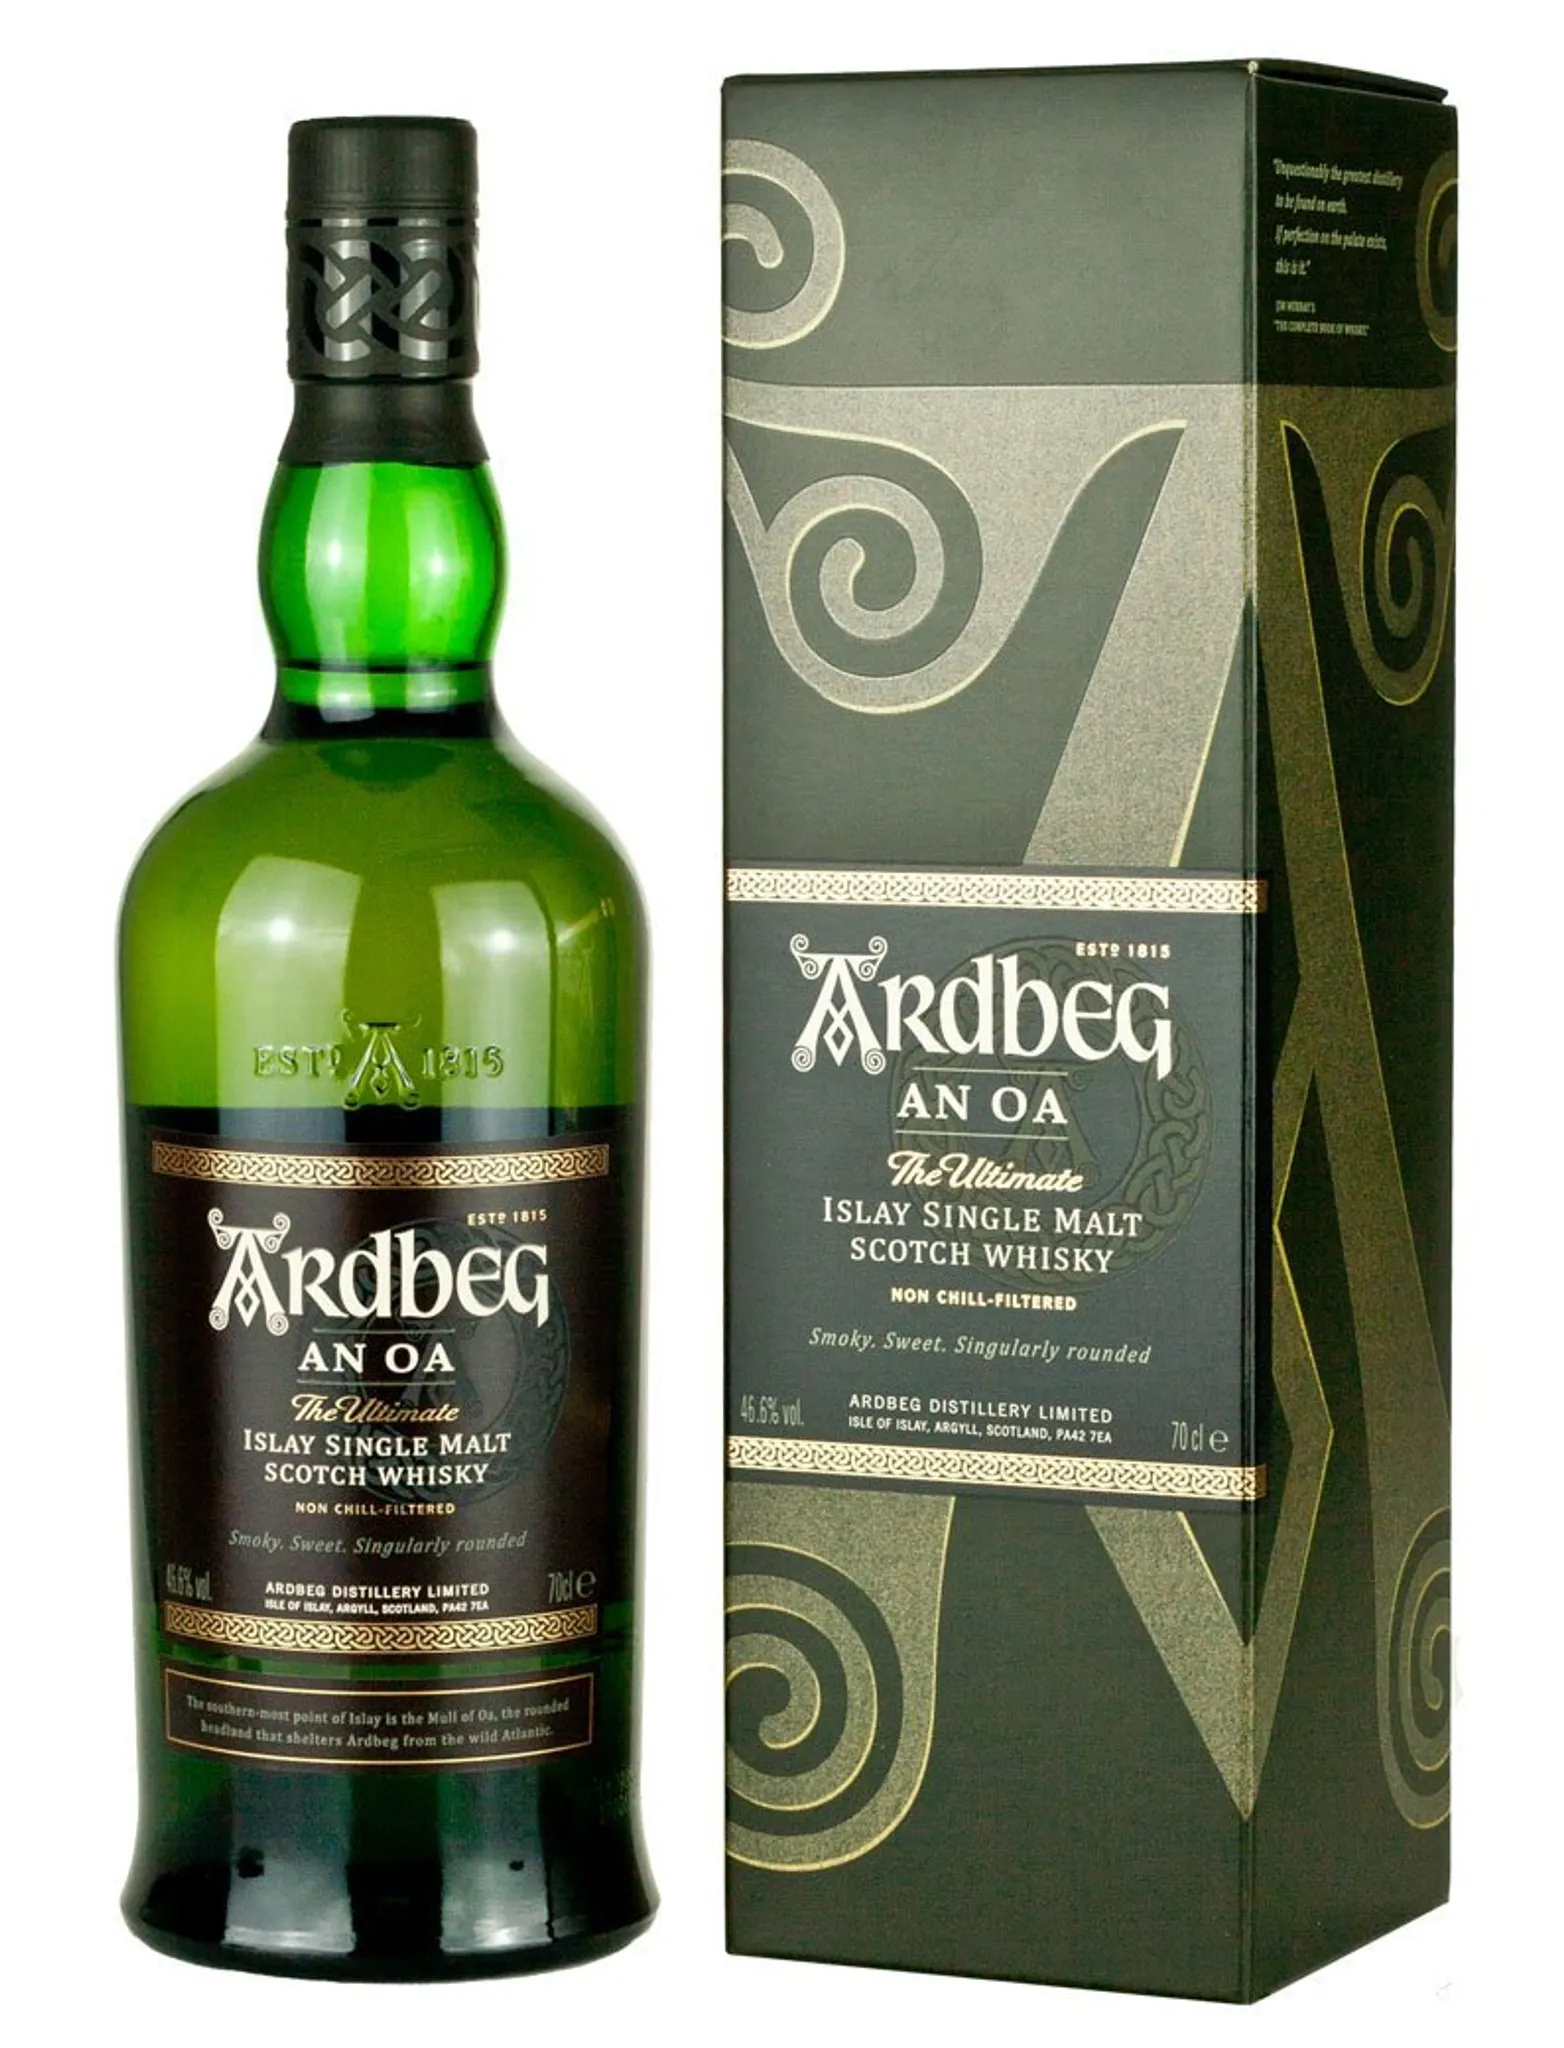 Scotch Malt in The Whisky An Single Geschenkpackung Islay Oa Ardbeg Ultimate